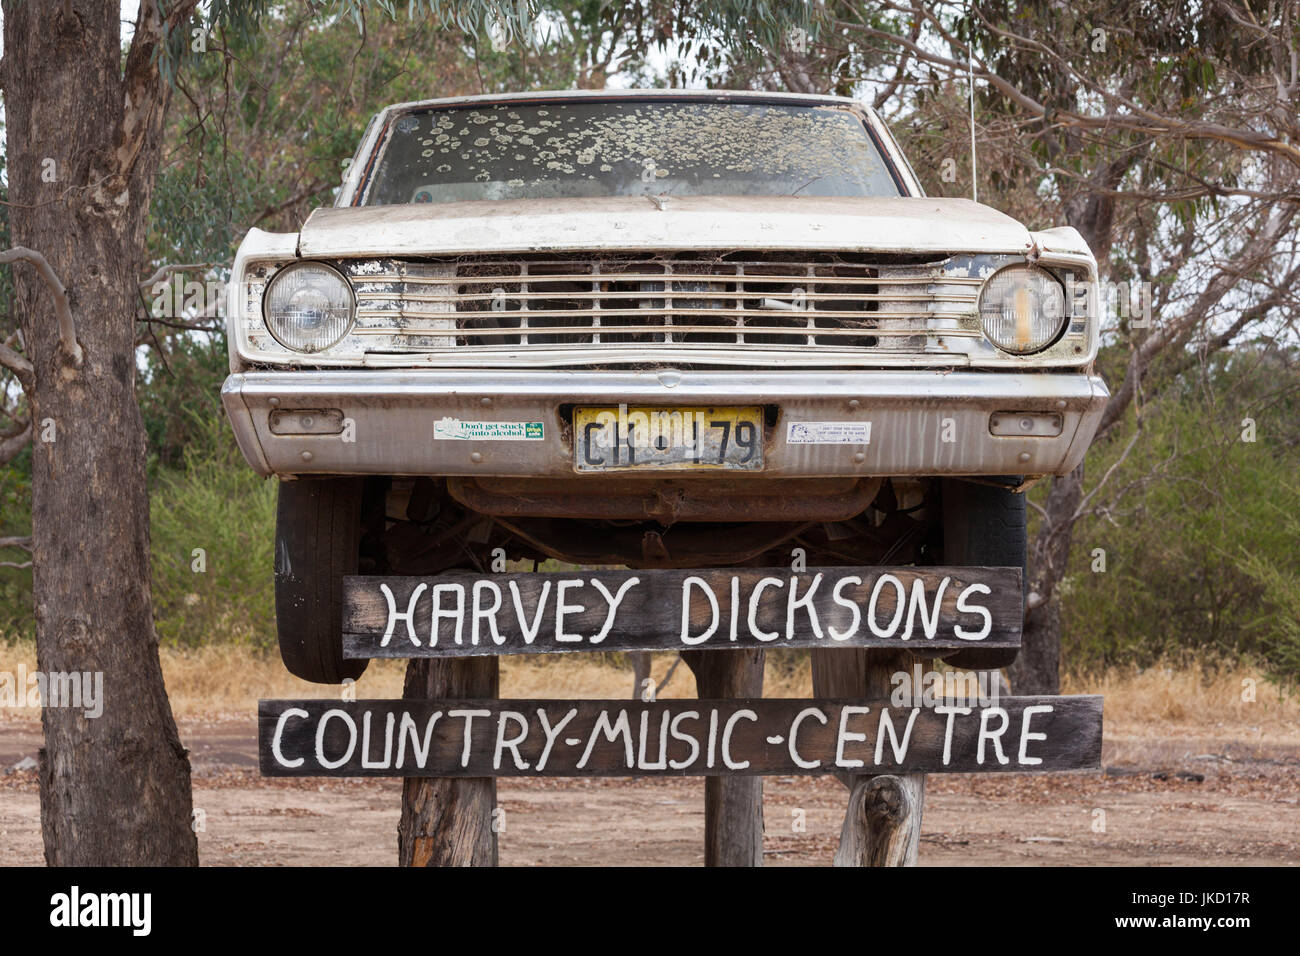 Australia, Western Australia, Sud-ovest, Boyup Brook, Harvey Dickson's Country Music Center, segno di auto Foto Stock